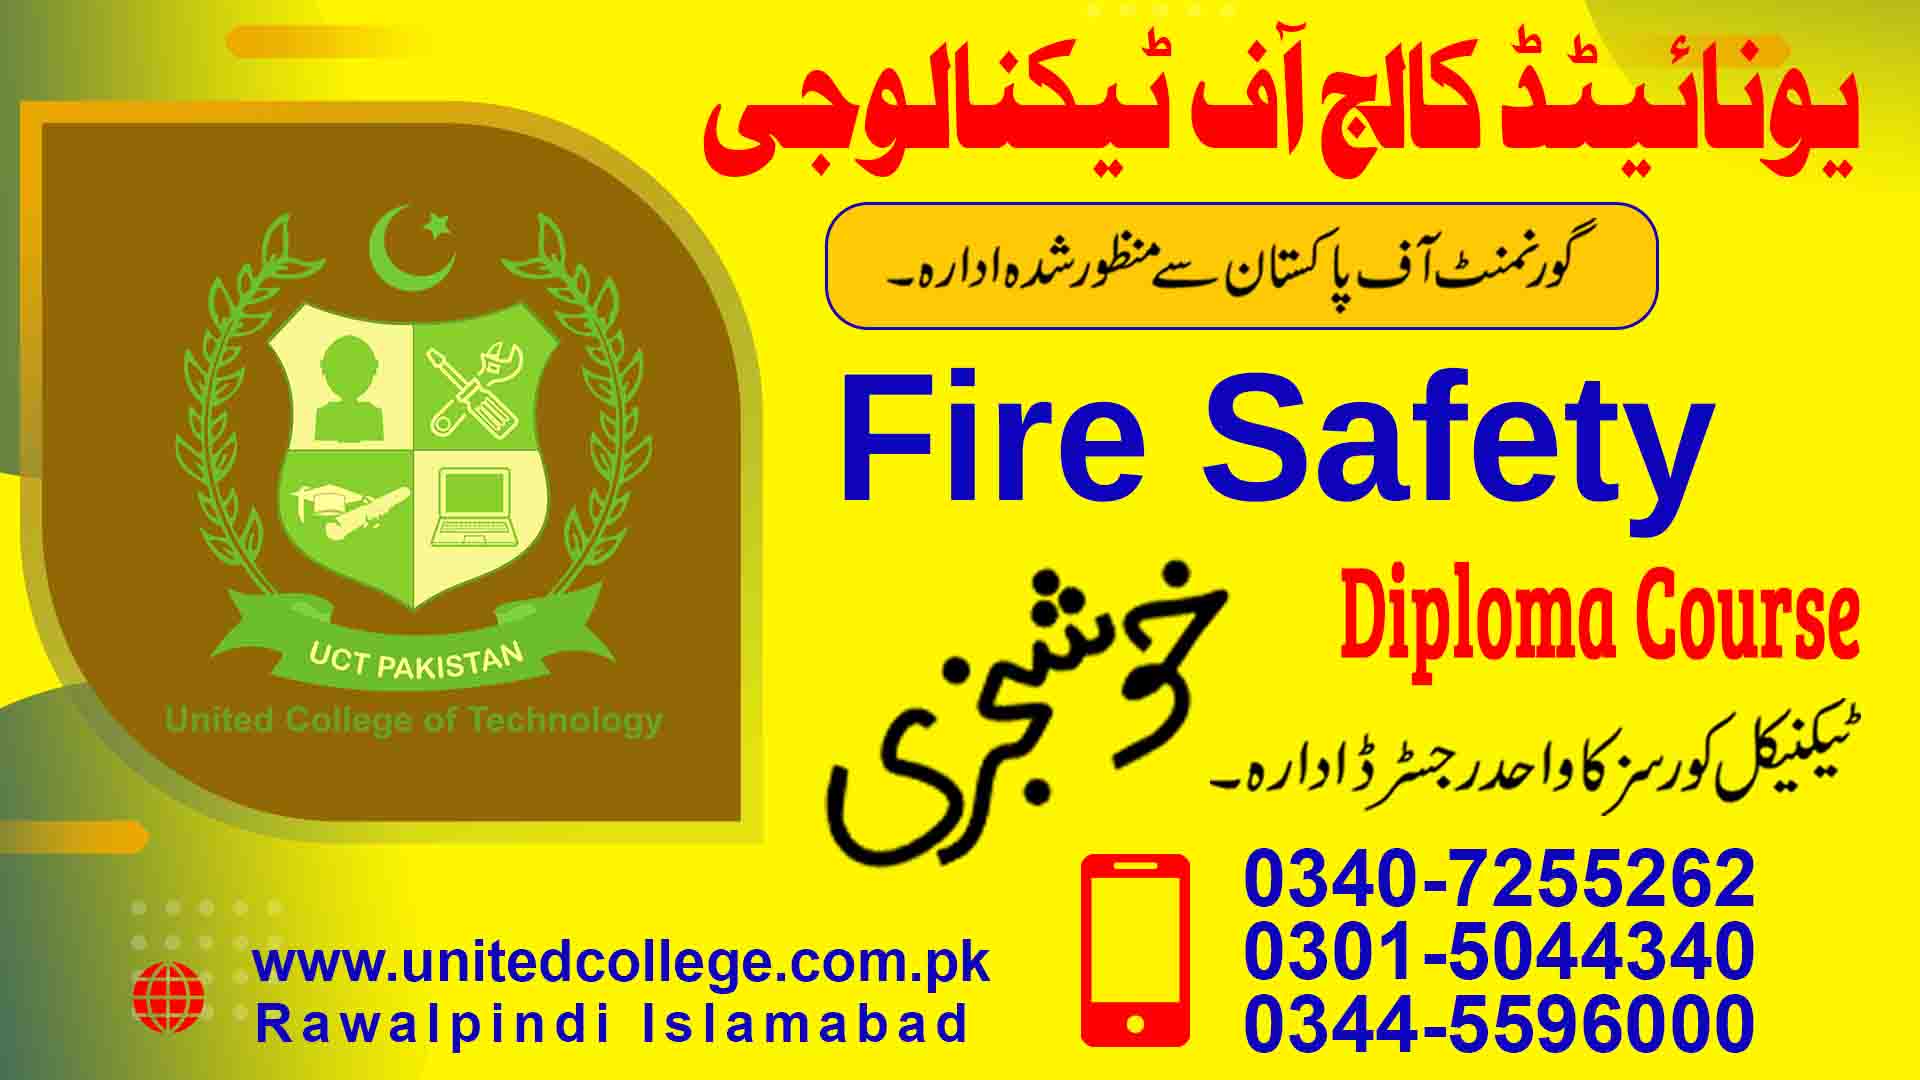 FIRE SAFETY COURSE IN RAWALPINDI ISLAMABAD PAKISTAN